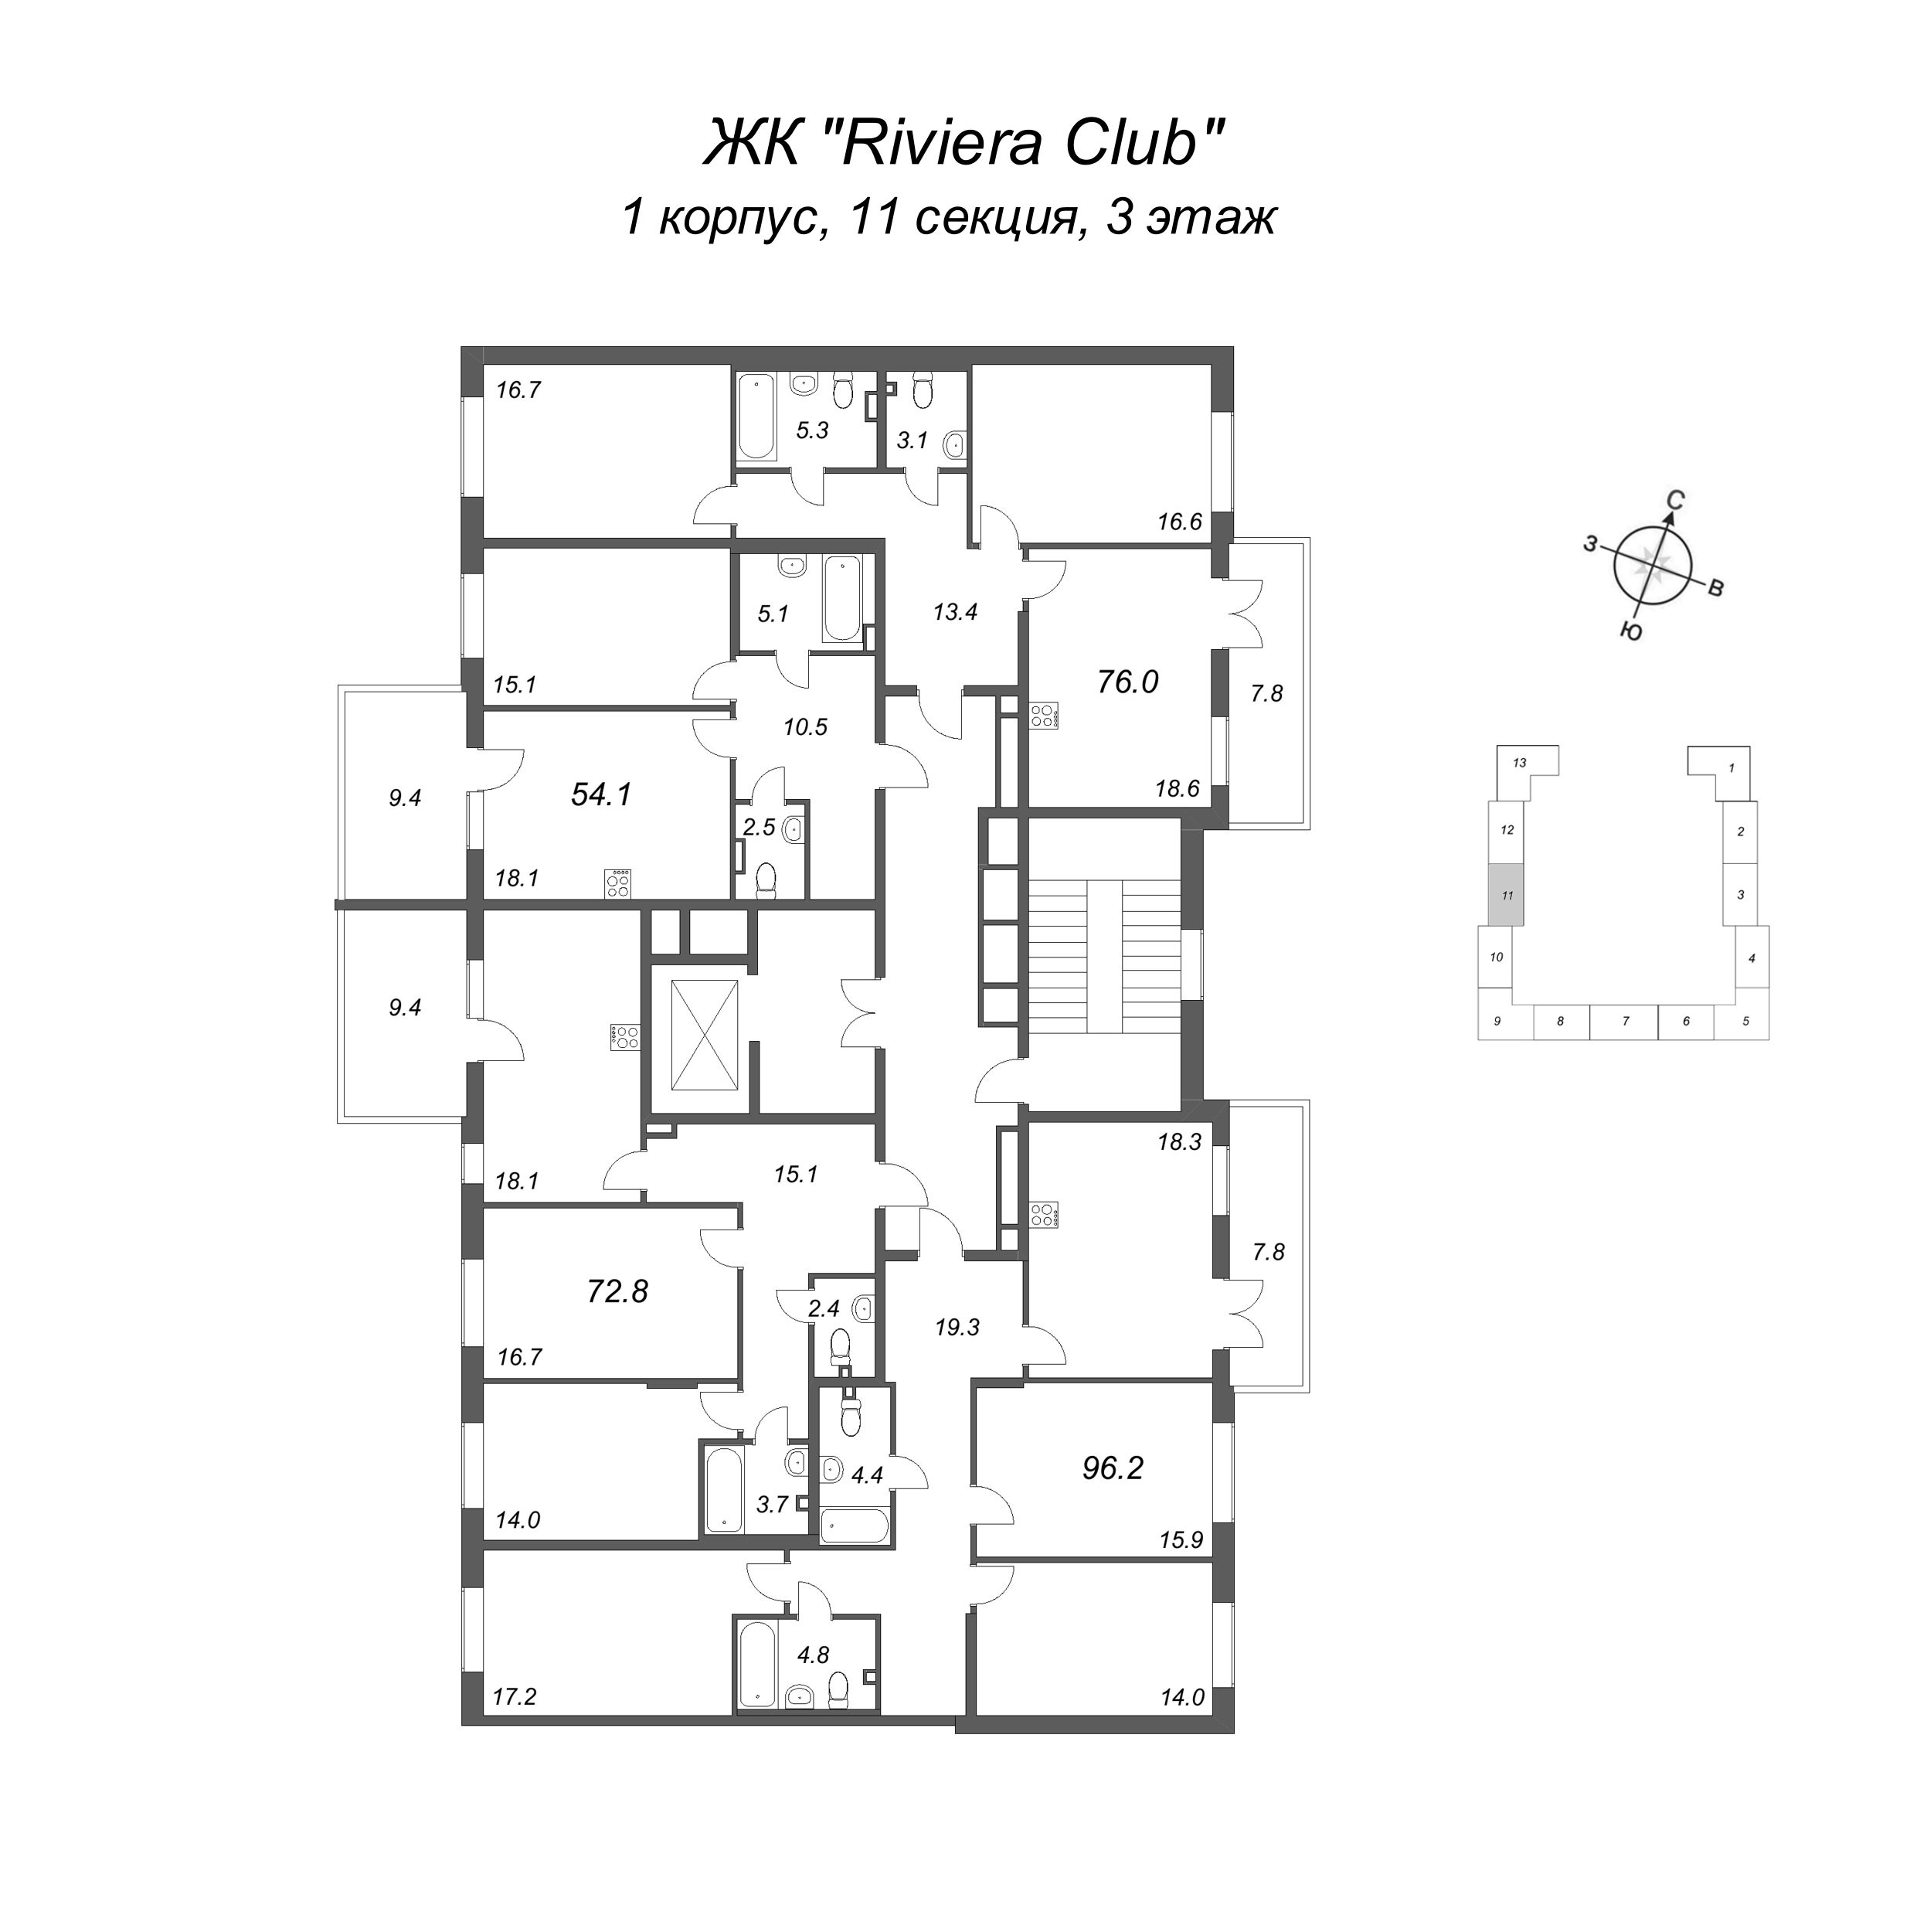 3-комнатная (Евро) квартира, 72.8 м² в ЖК "Riviera Club" - планировка этажа